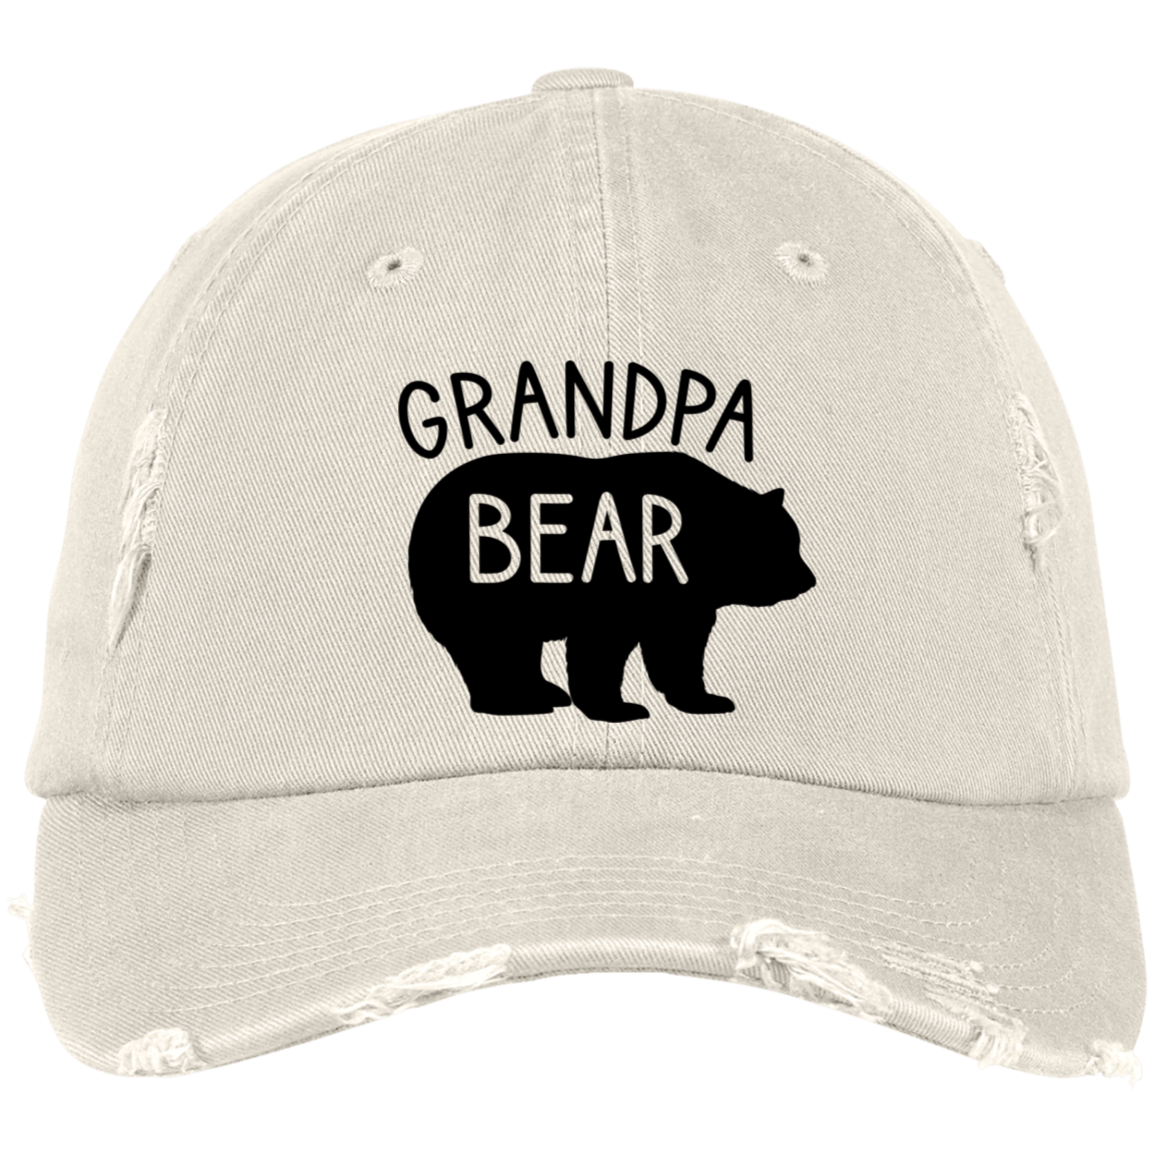 Grandpa Embroidered Distressed Dad Cap